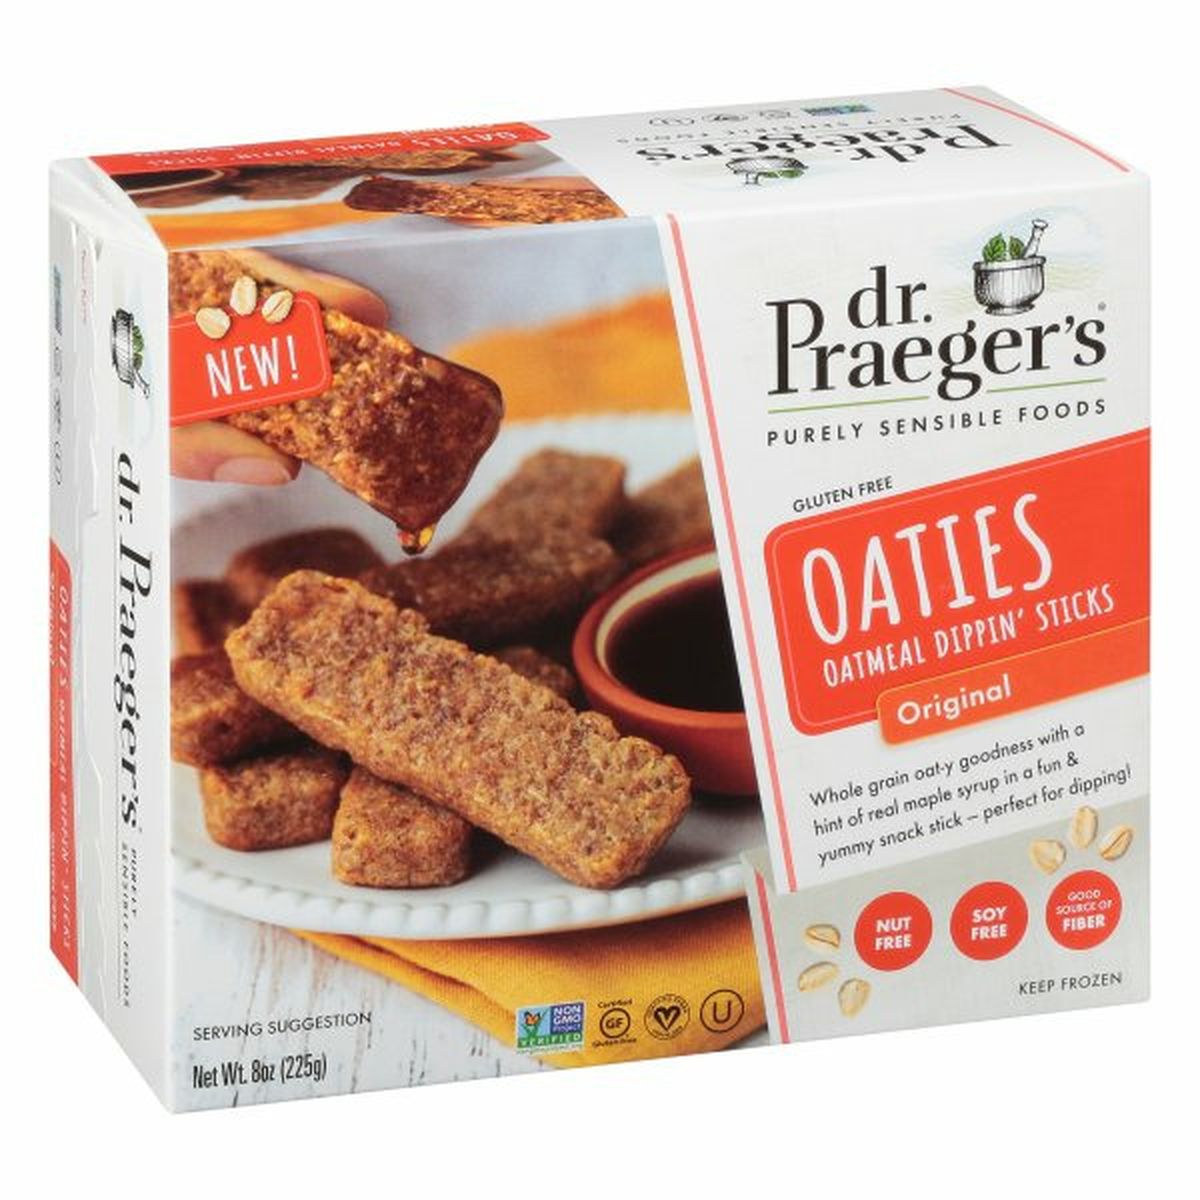 Calories in Dr. Praeger's Oatmeal Dippin' Sticks, Oaties, Gluten Free, Original